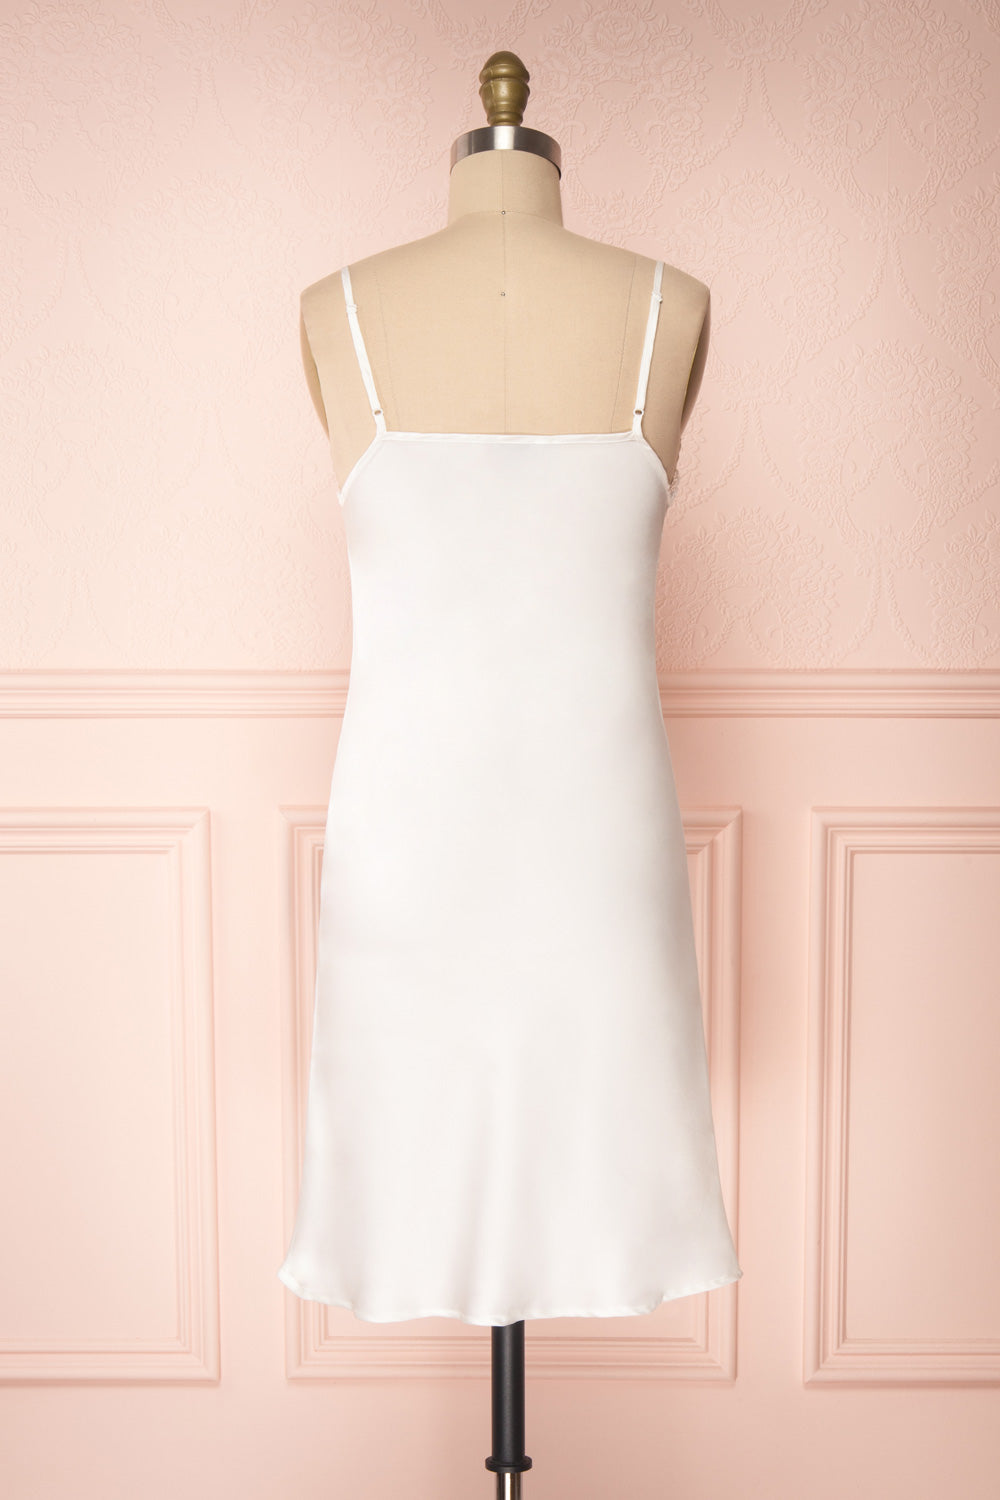 Adella Blanc White Short Satin Dress w/ Lace